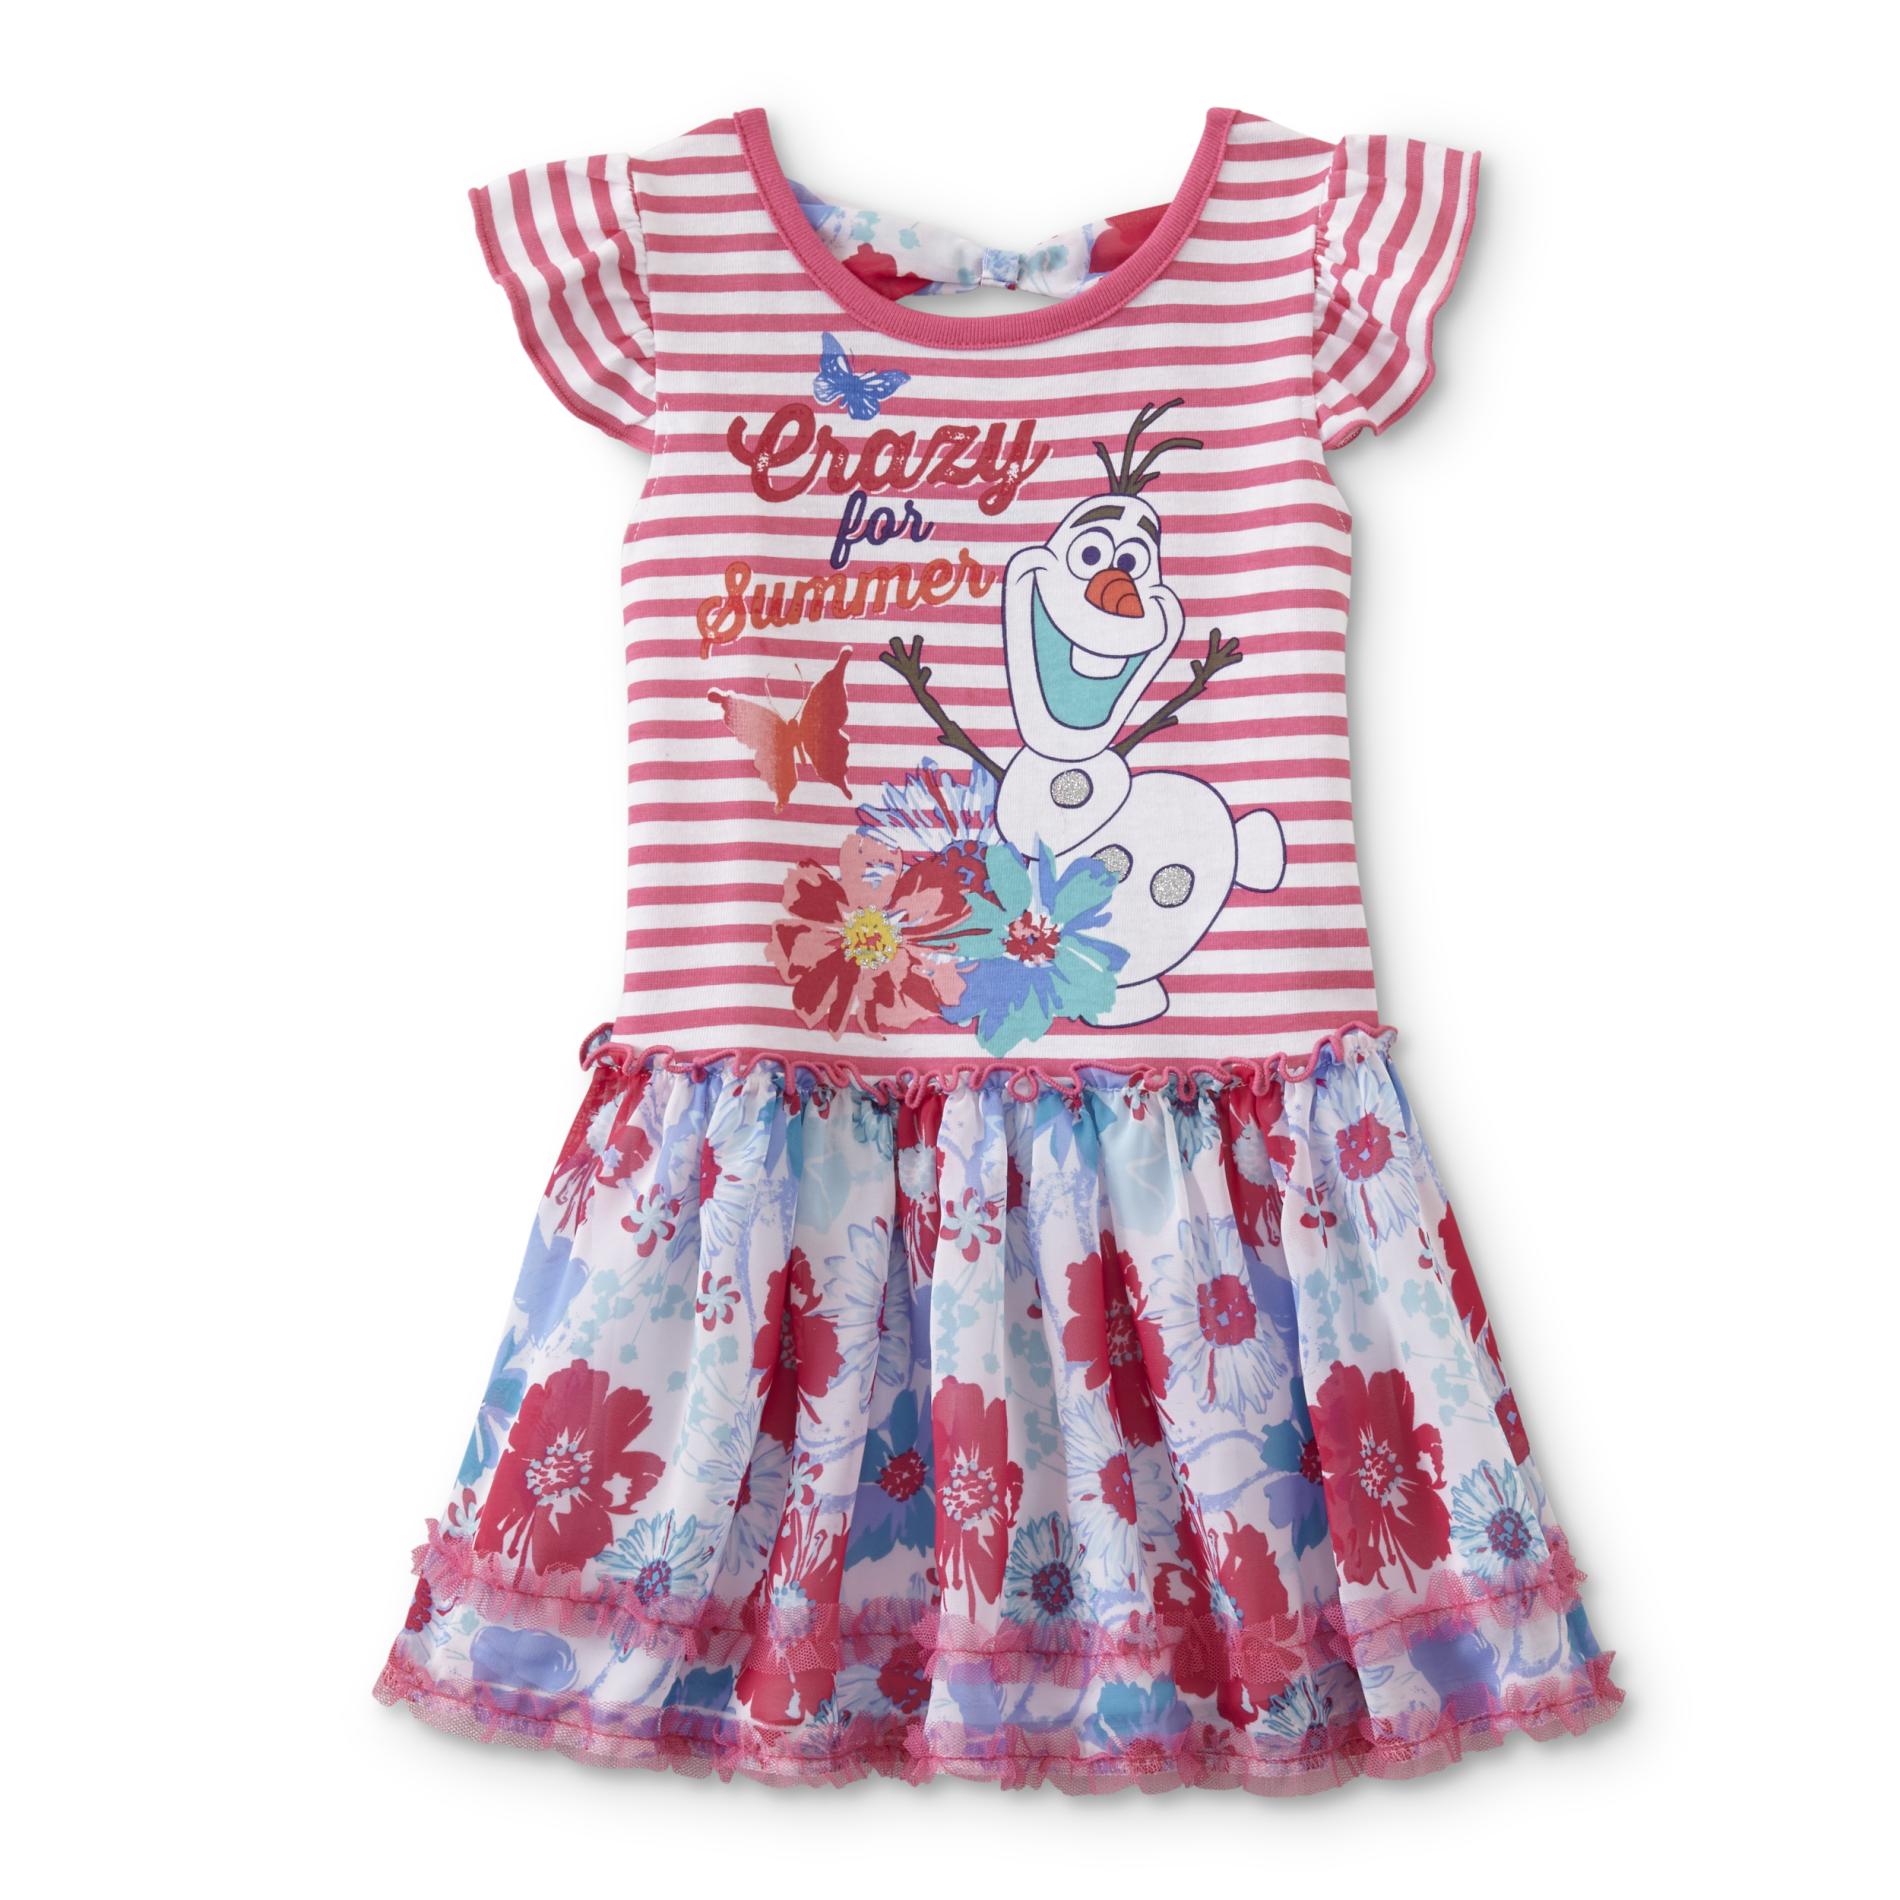 Disney Frozen Toddler Girls' Dress - Floral & Striped